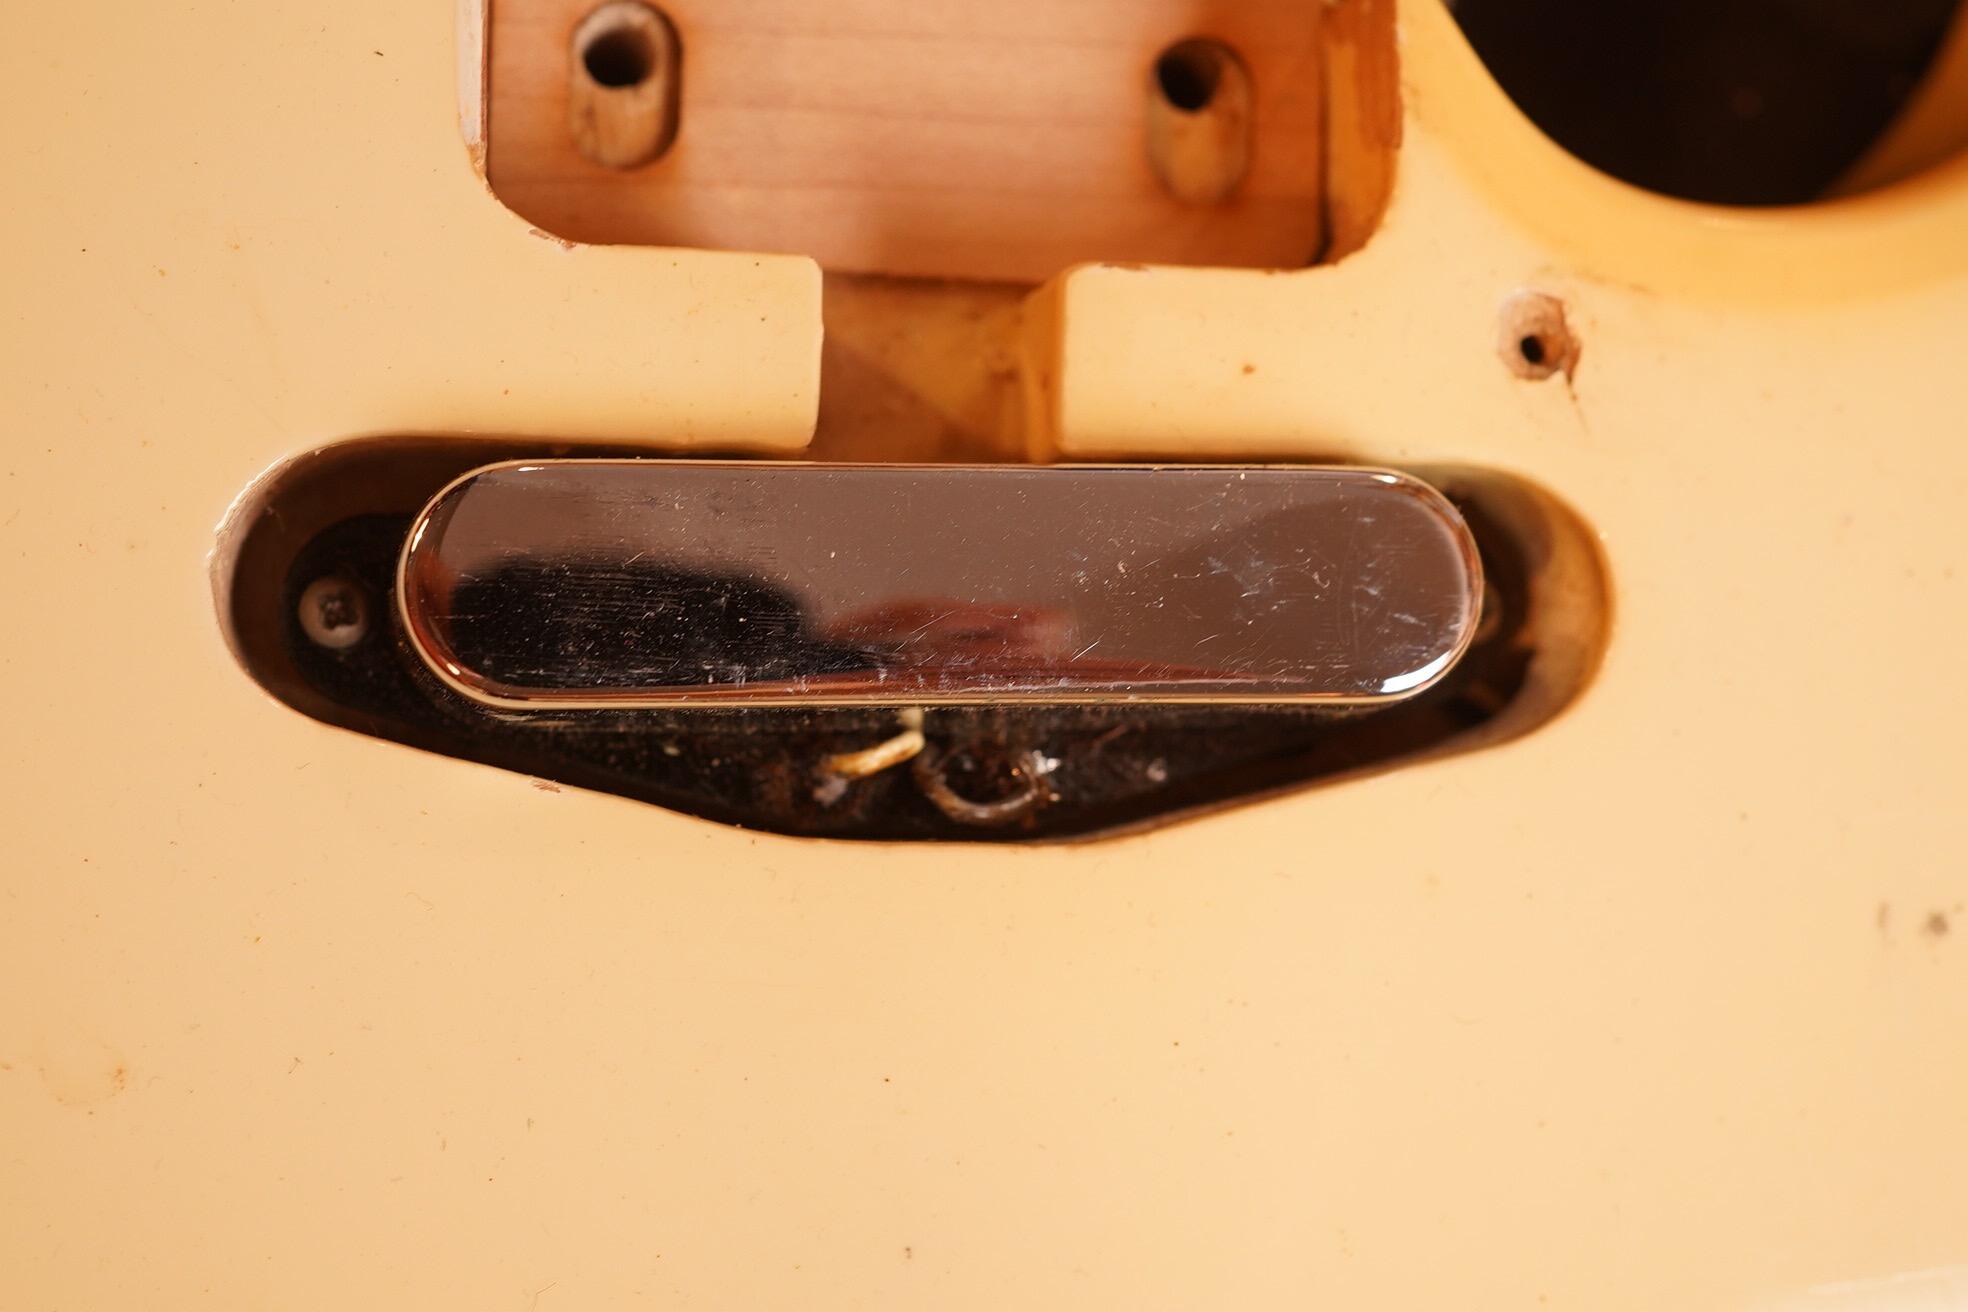 1969 Fender Telecaster Blonde